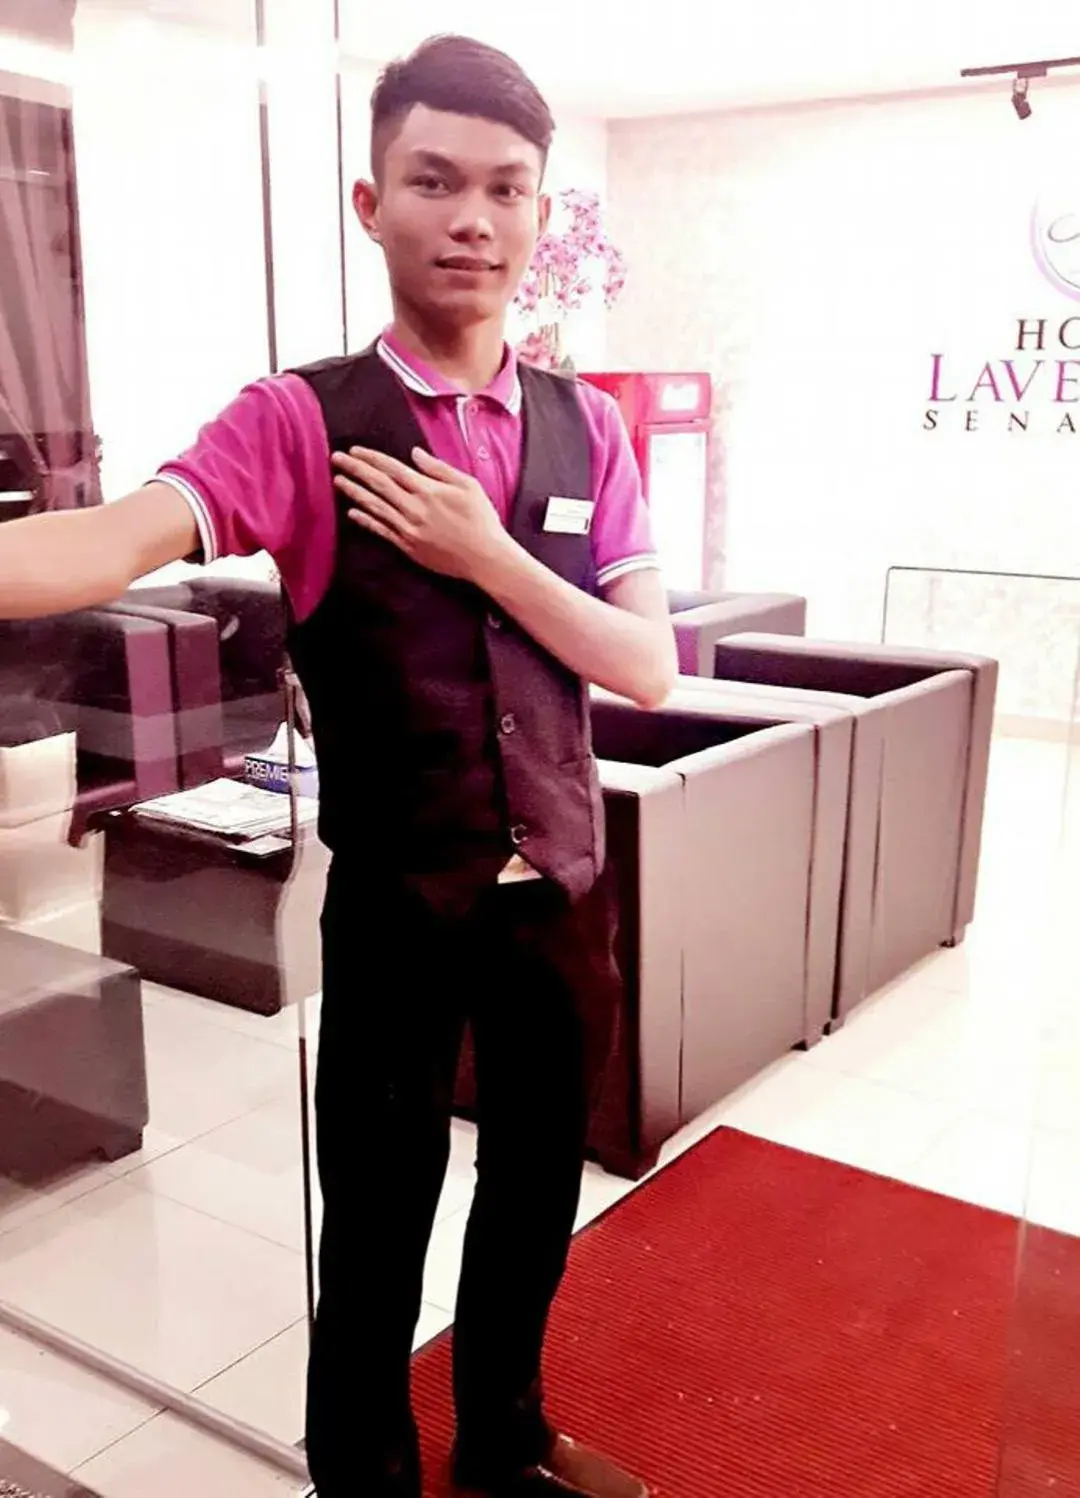 Staff in Hotel Lavender Senawang